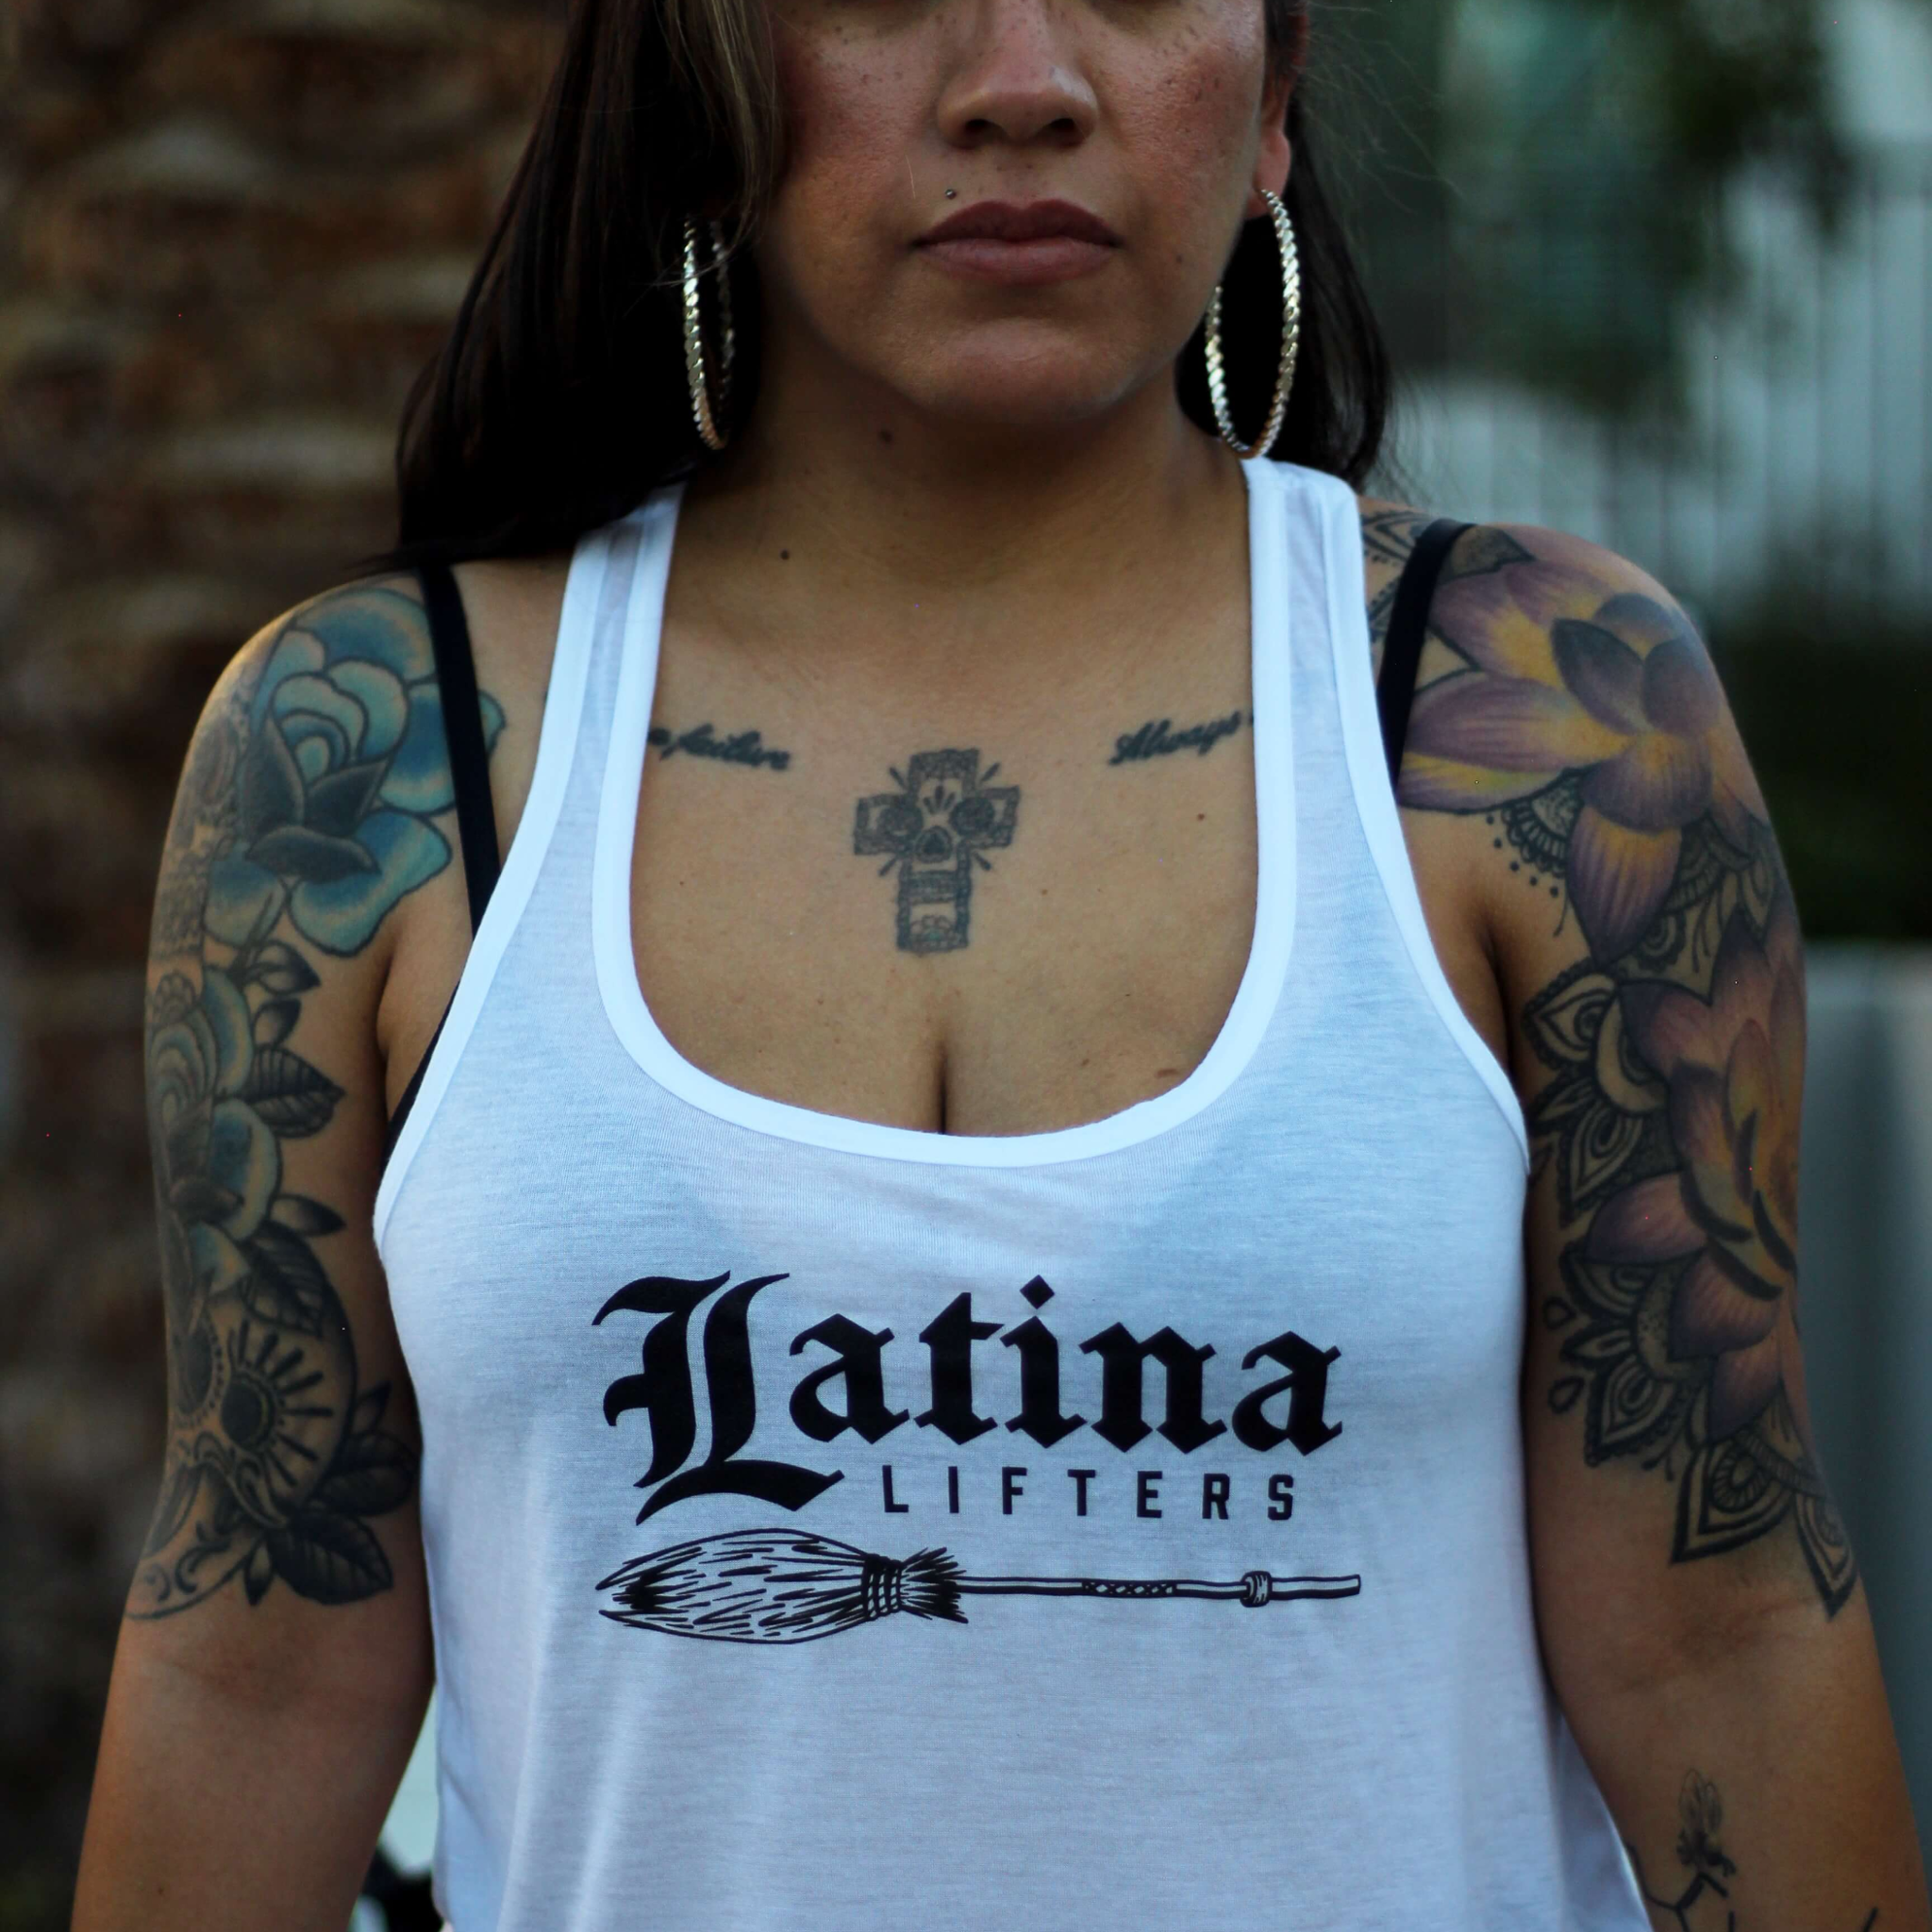 LL Spooky tank - Latina Lifters